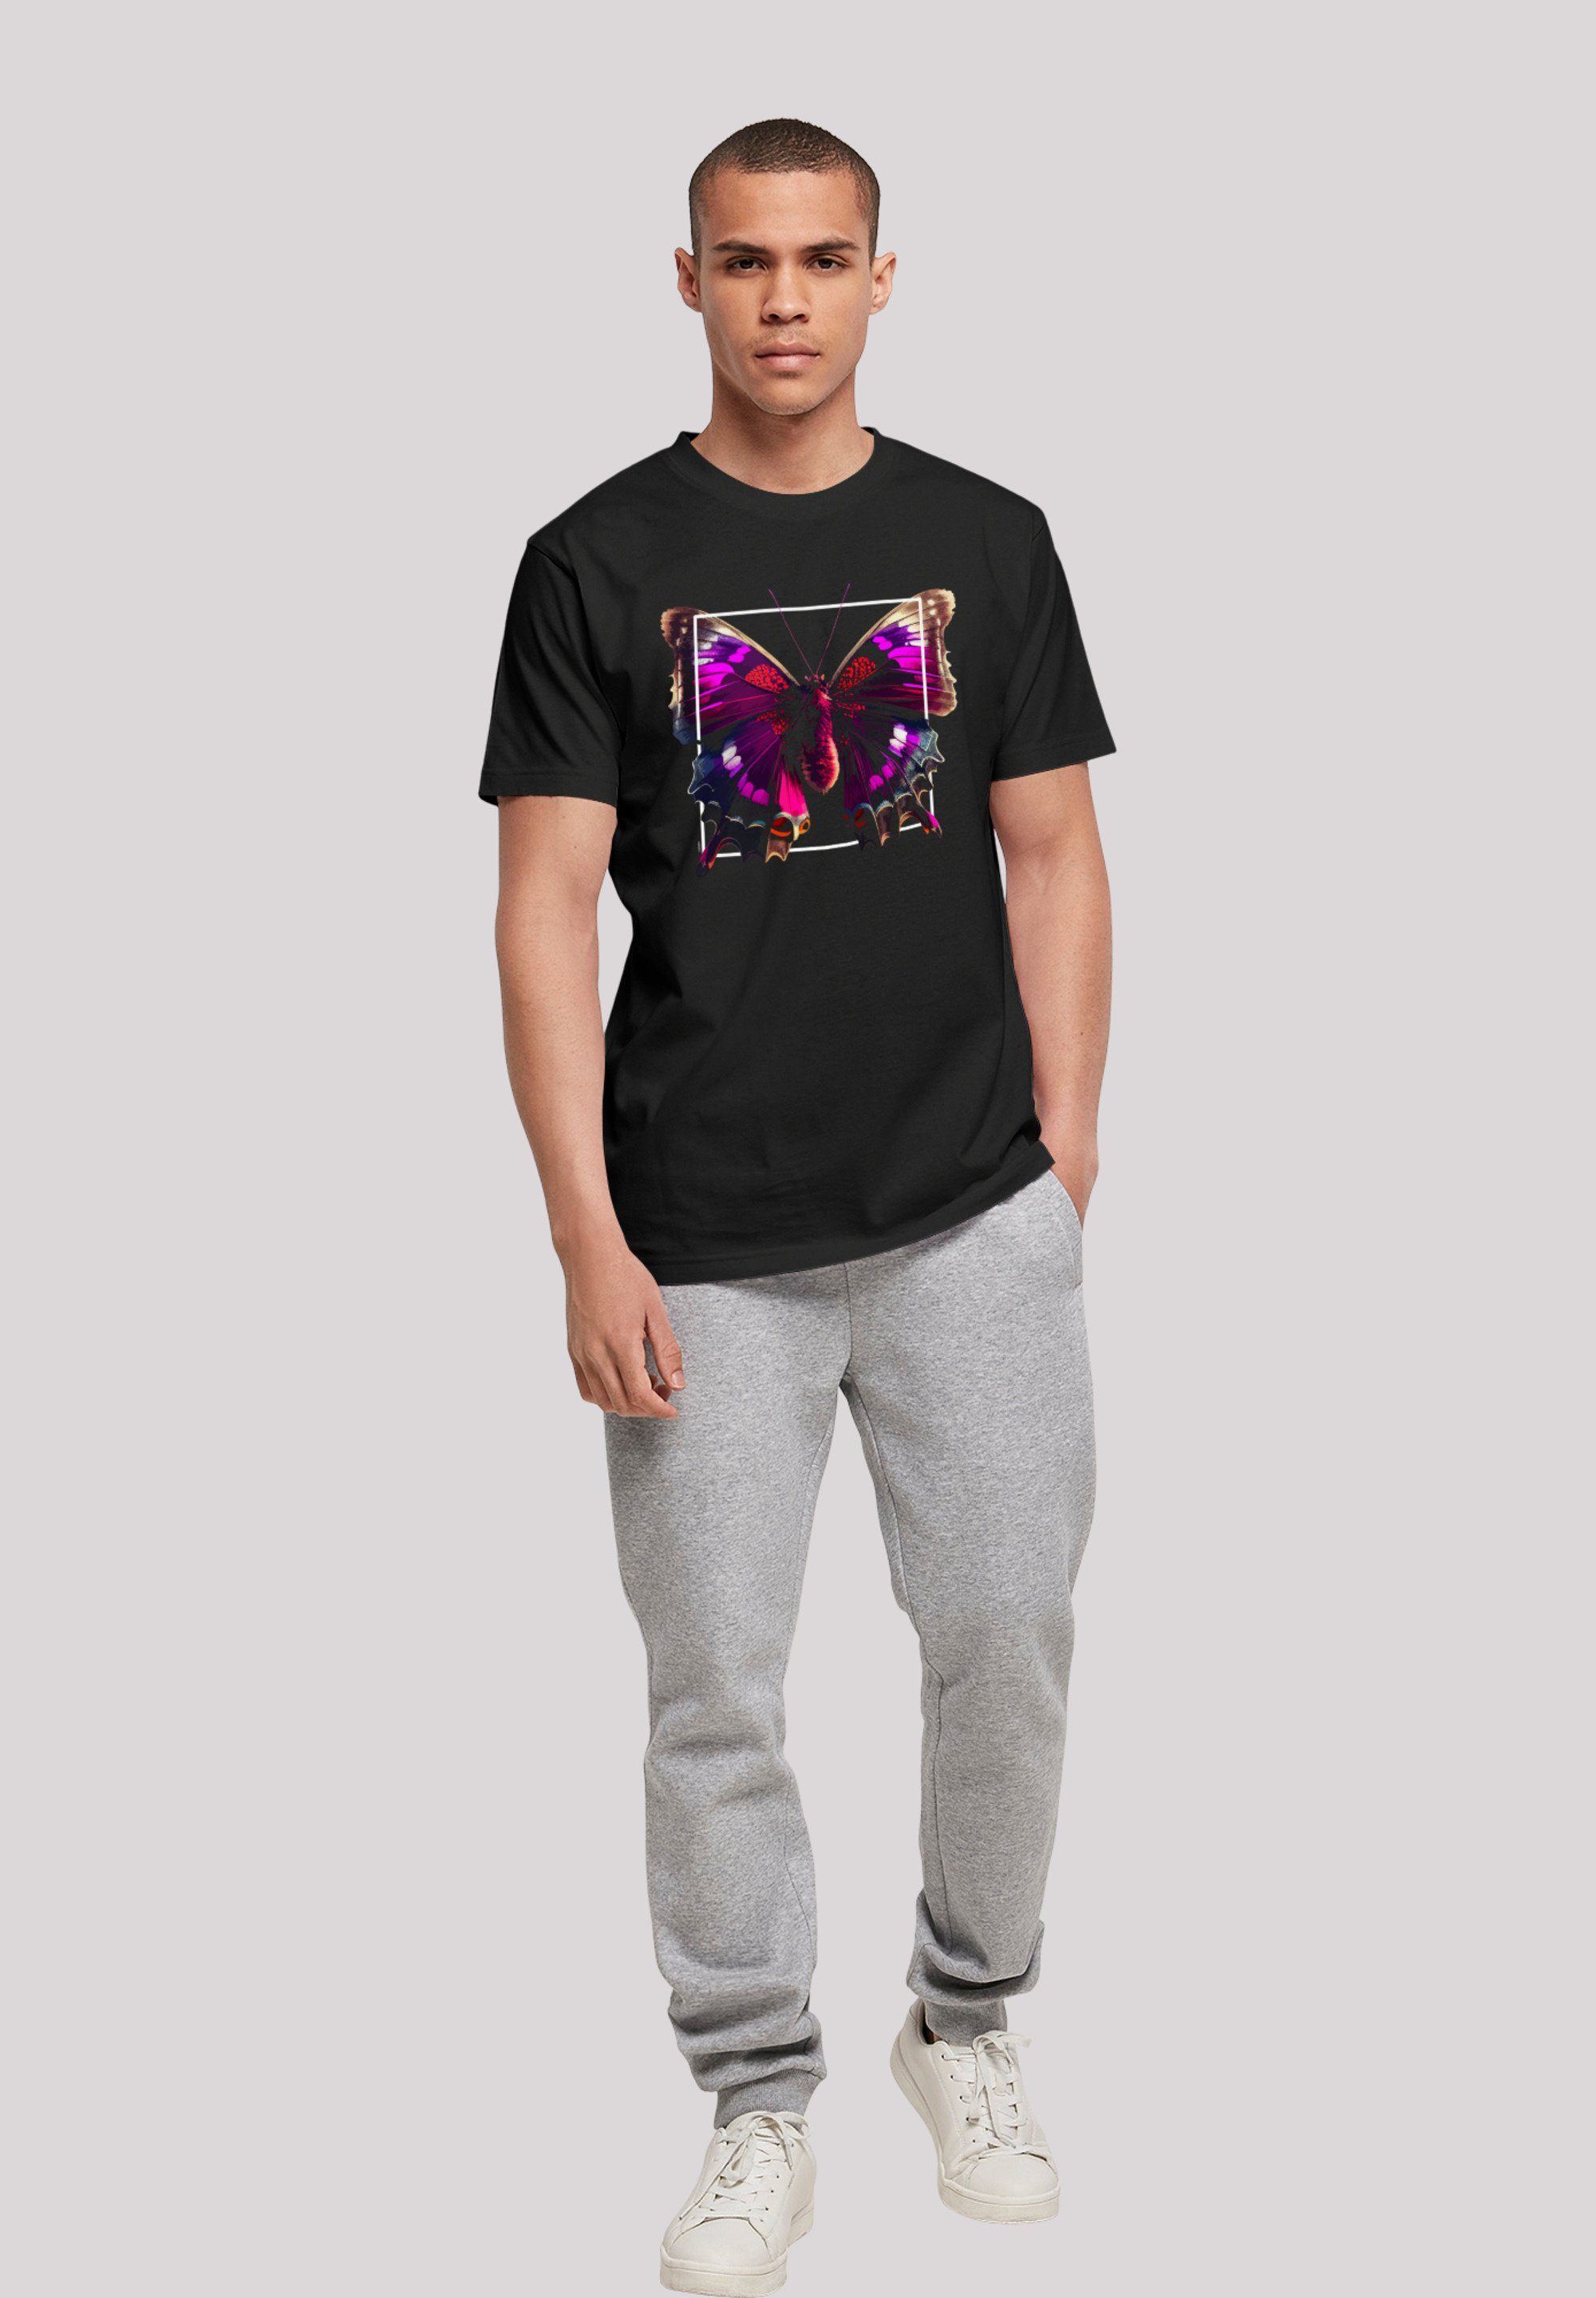 F4NT4STIC TEE Pink Schmetterling Print T-Shirt UNISEX schwarz